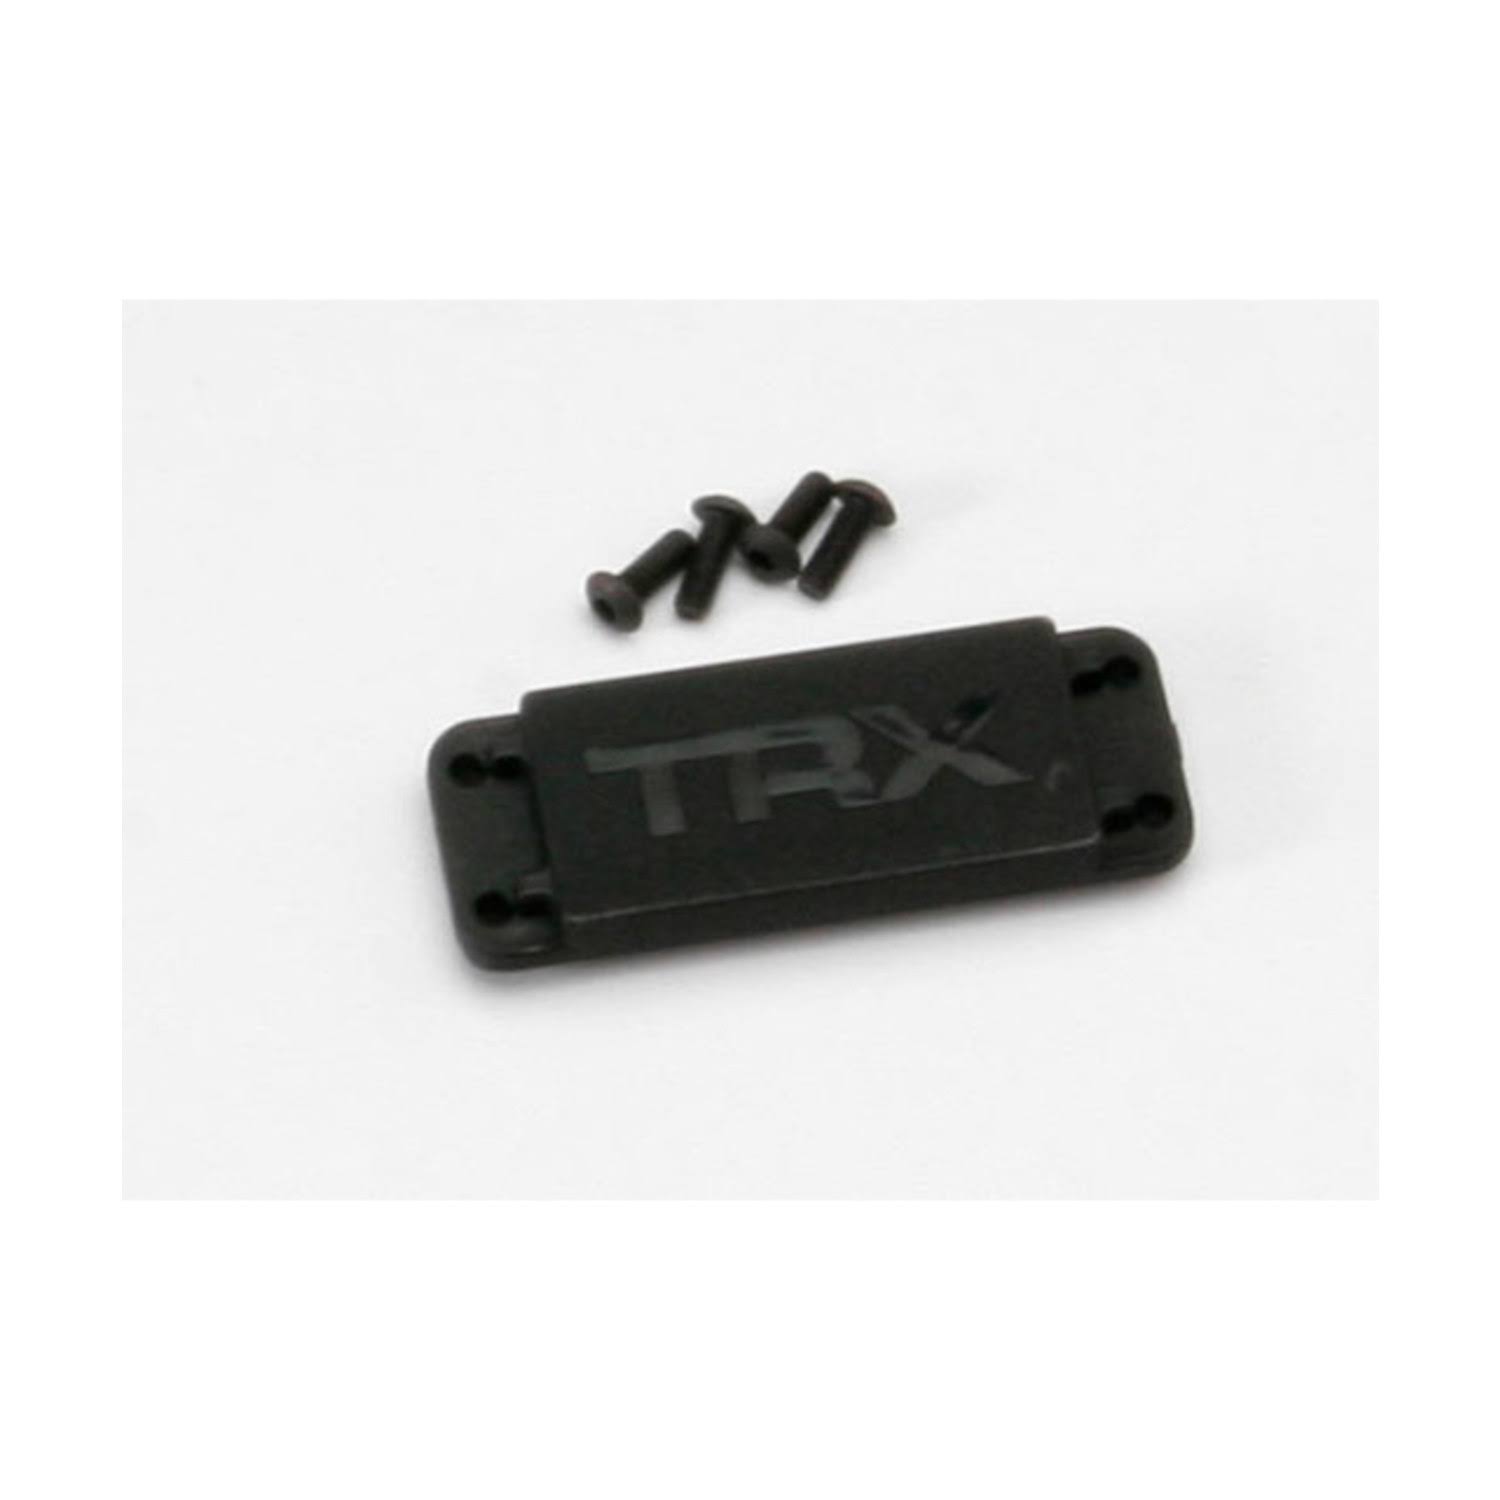 Traxxas 5326X Servo Cover Plate with Screws